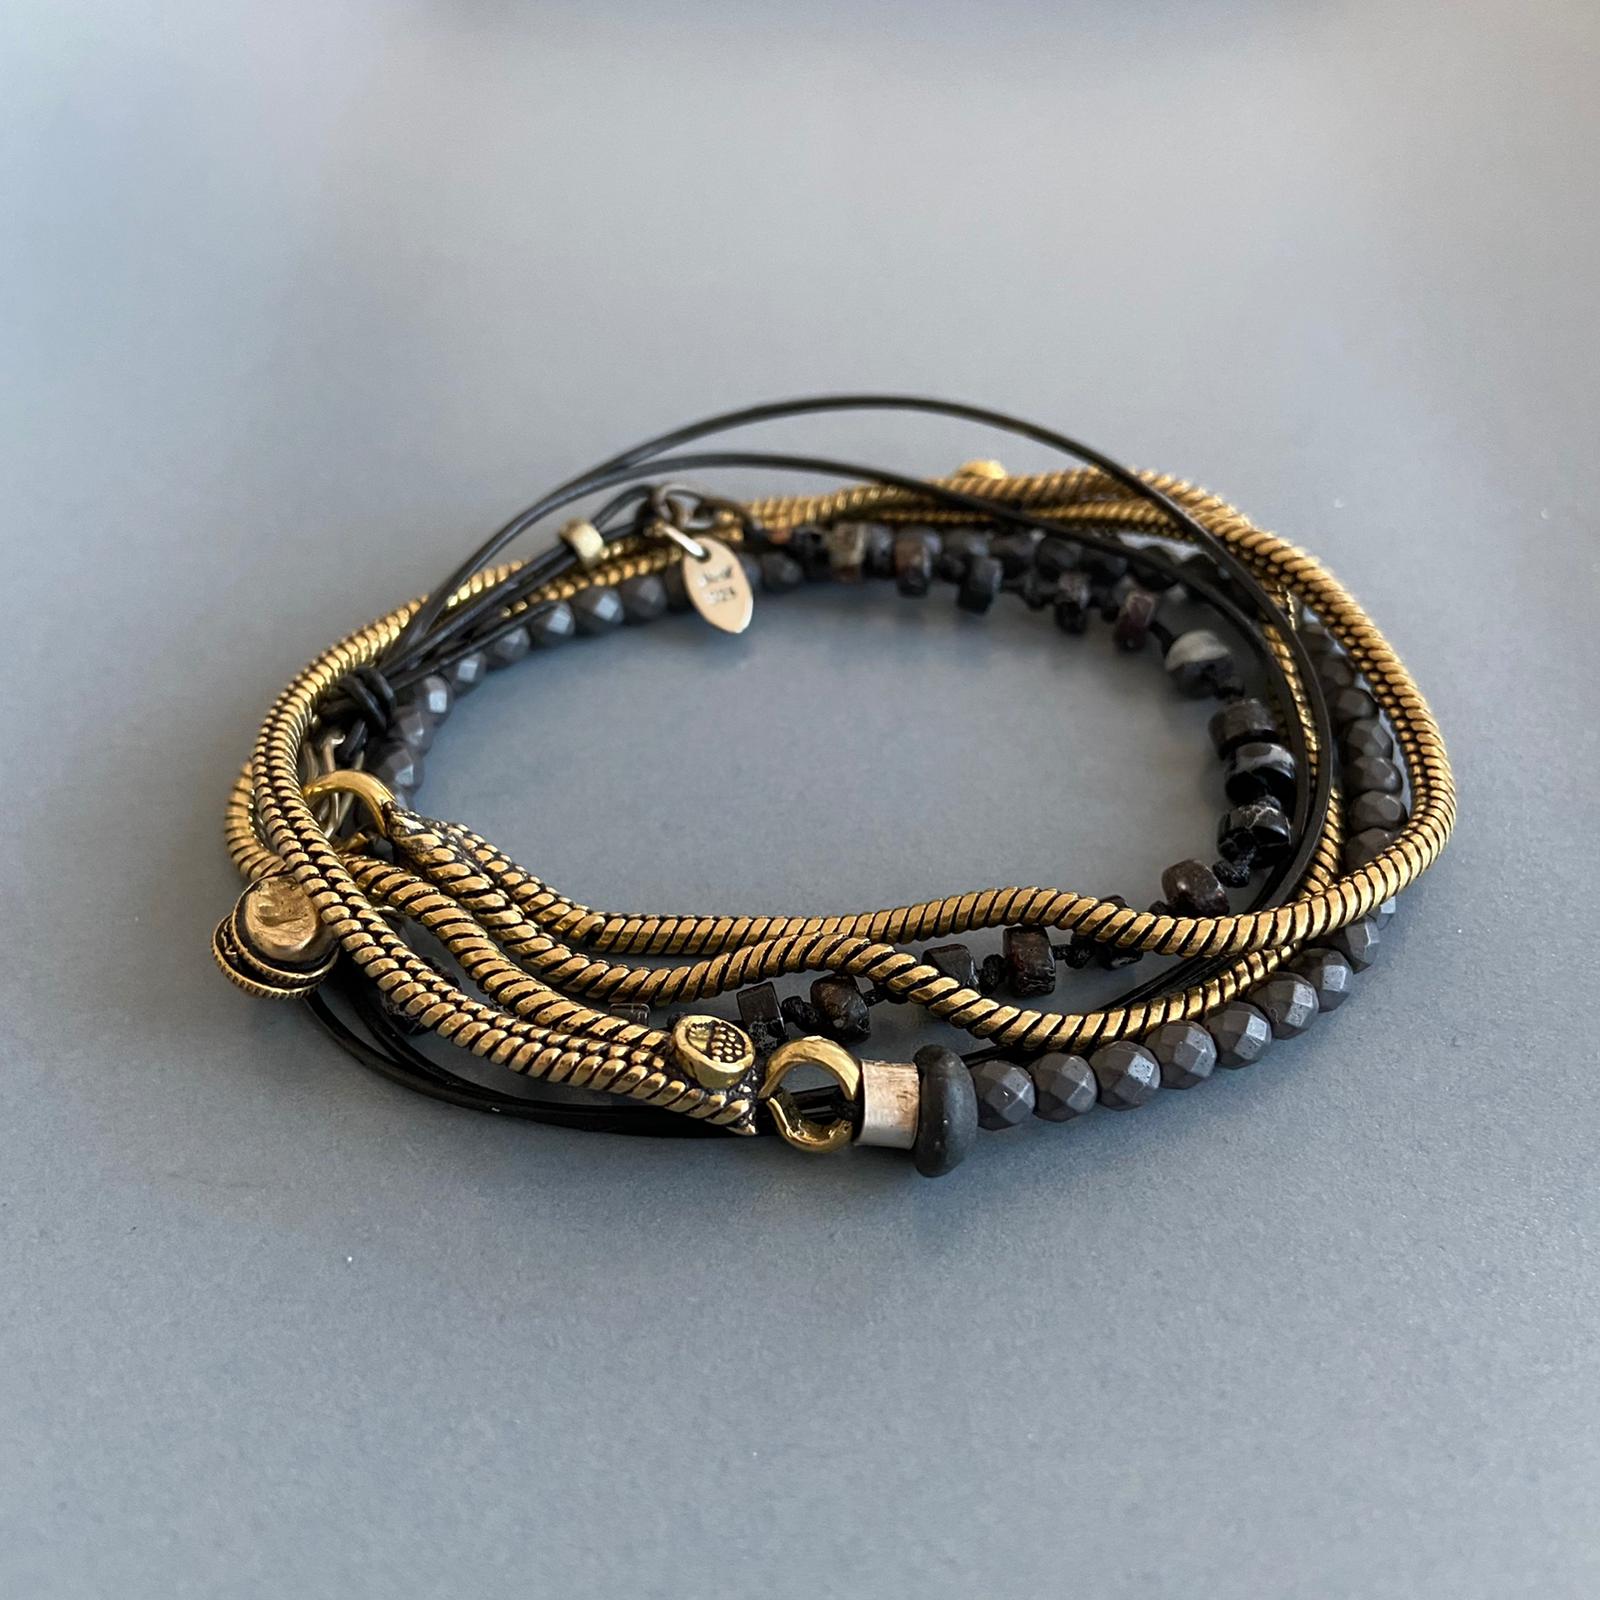 Sultan 2 in 1 Necklace & Bracelet